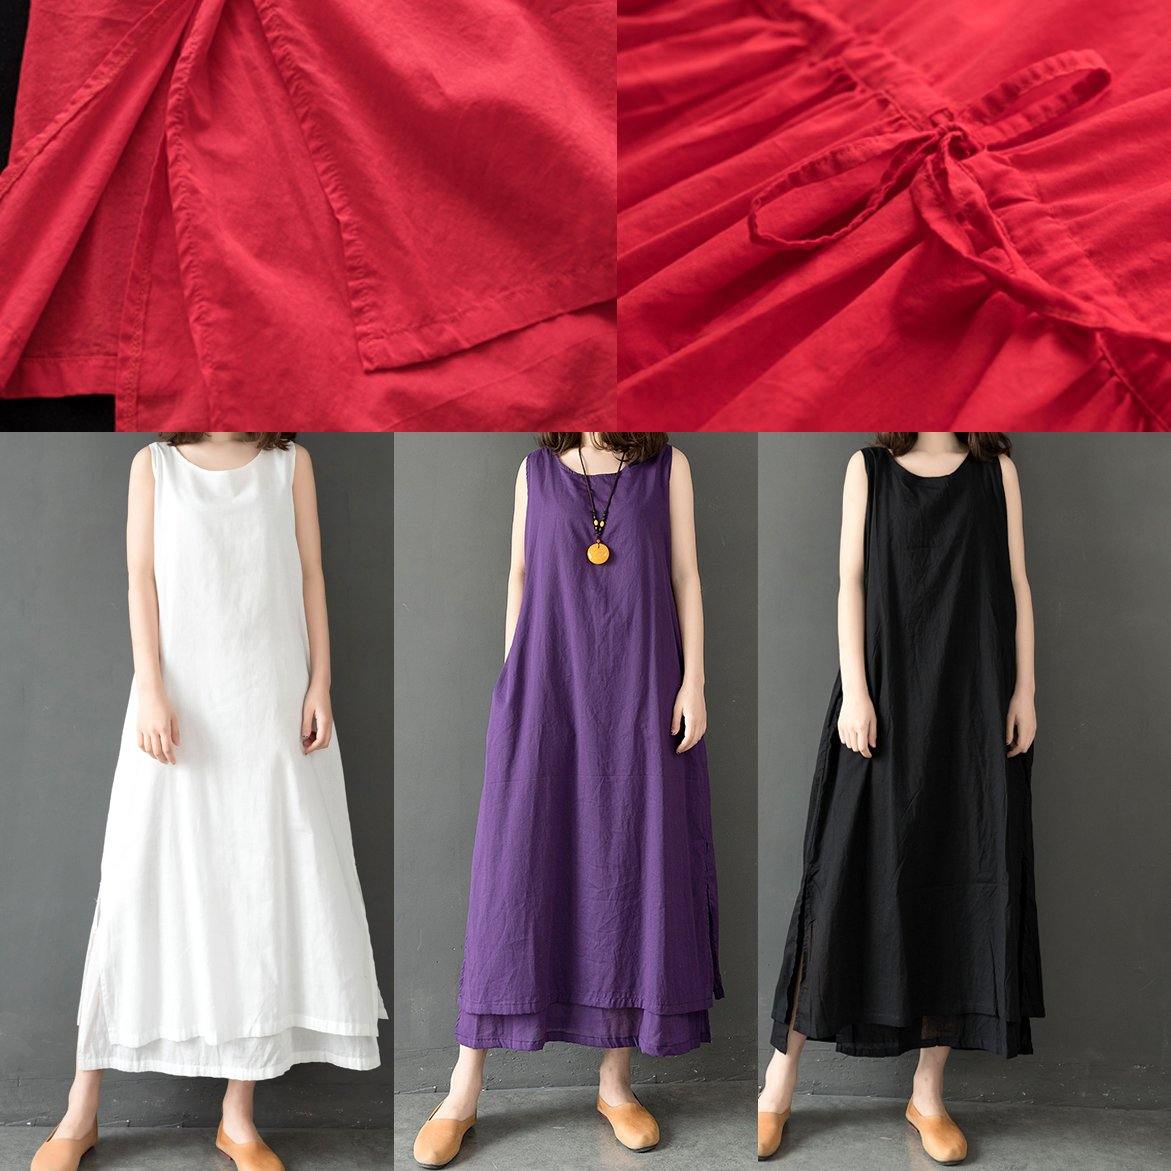 Modern layered cotton clothes Neckline white sleeveless cotton Dresses summer - Omychic